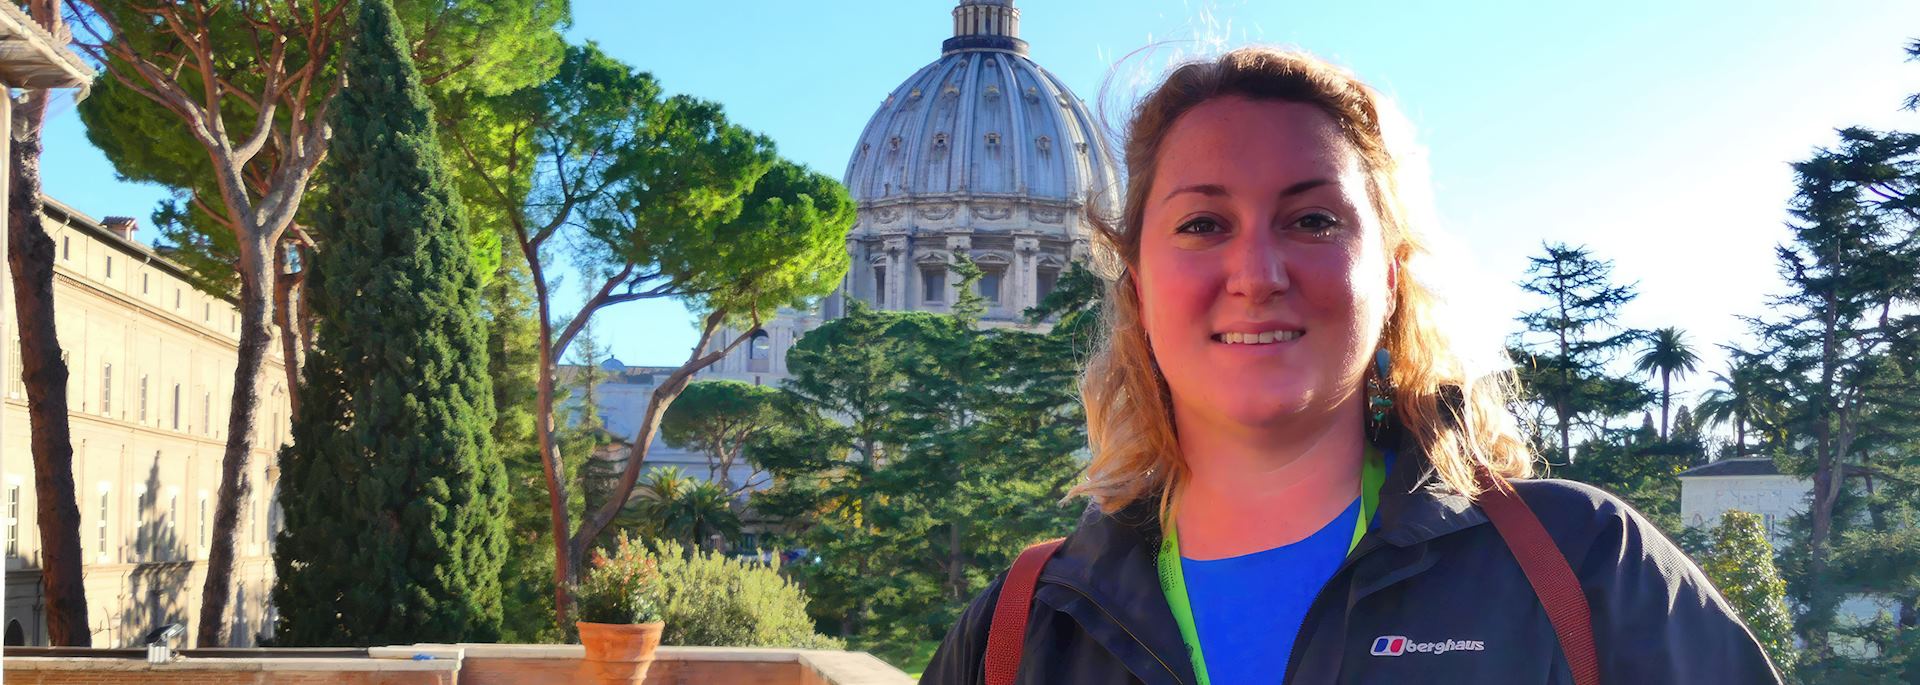 Cara visiting Vatican City in Rome, Italy